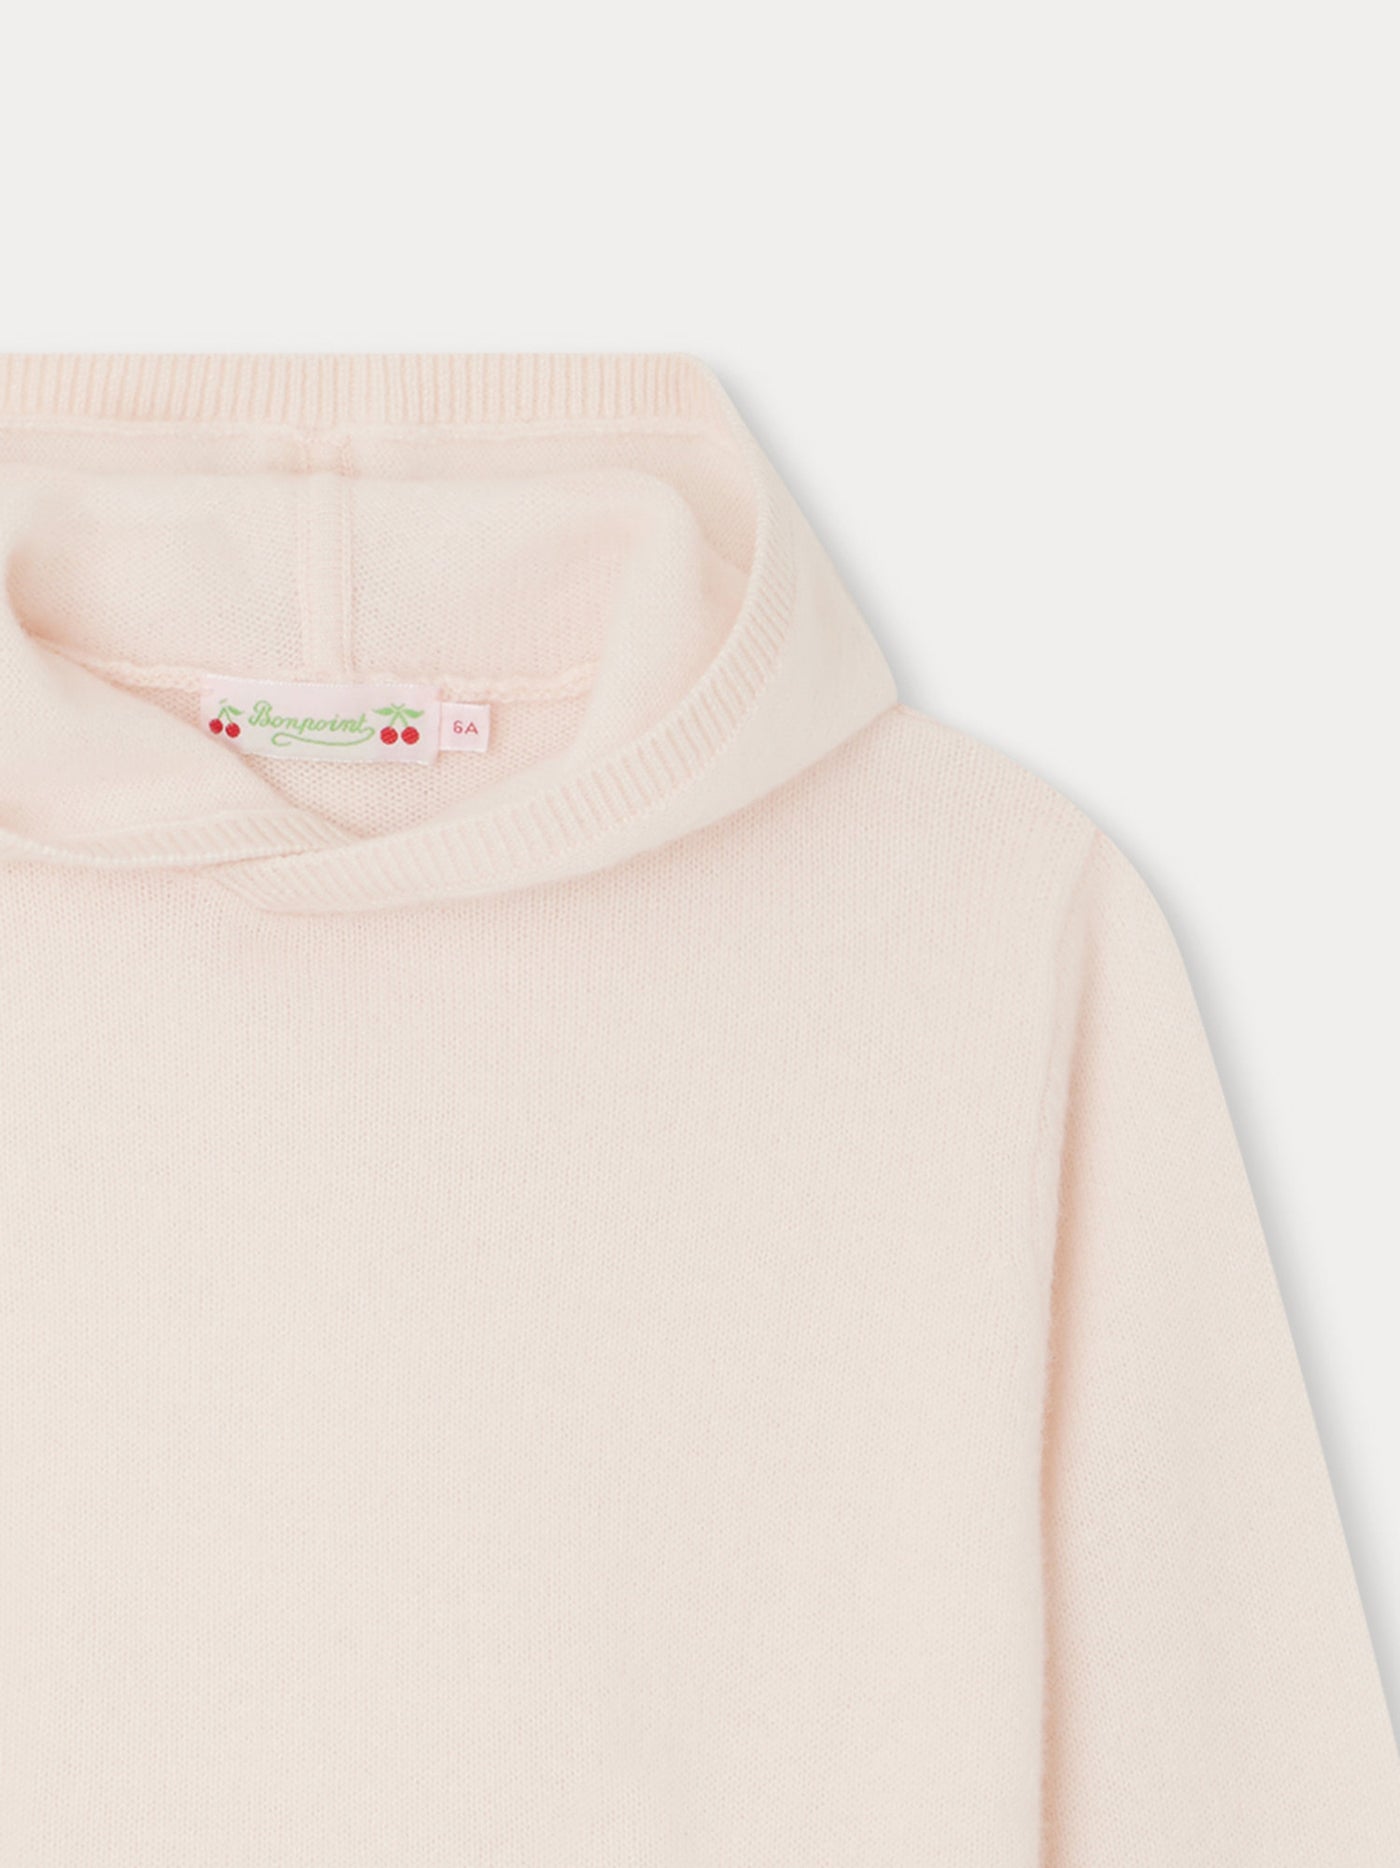 Dodie Sweater light pink